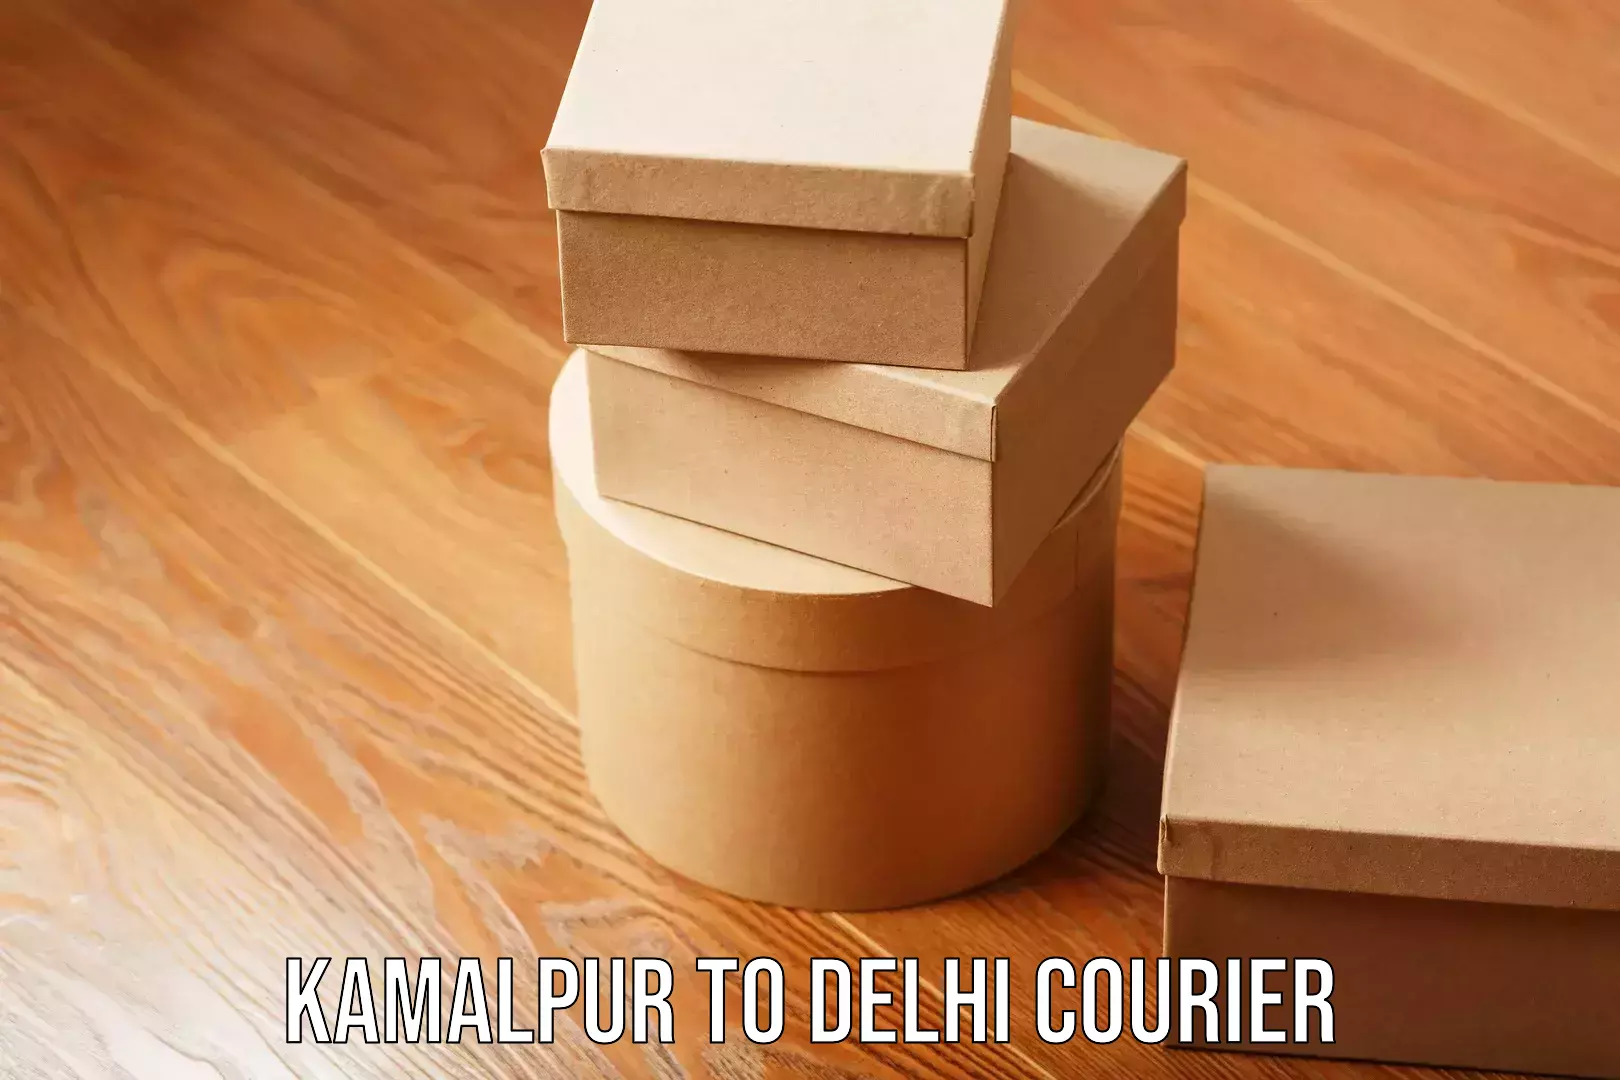 Digital courier platforms Kamalpur to Delhi